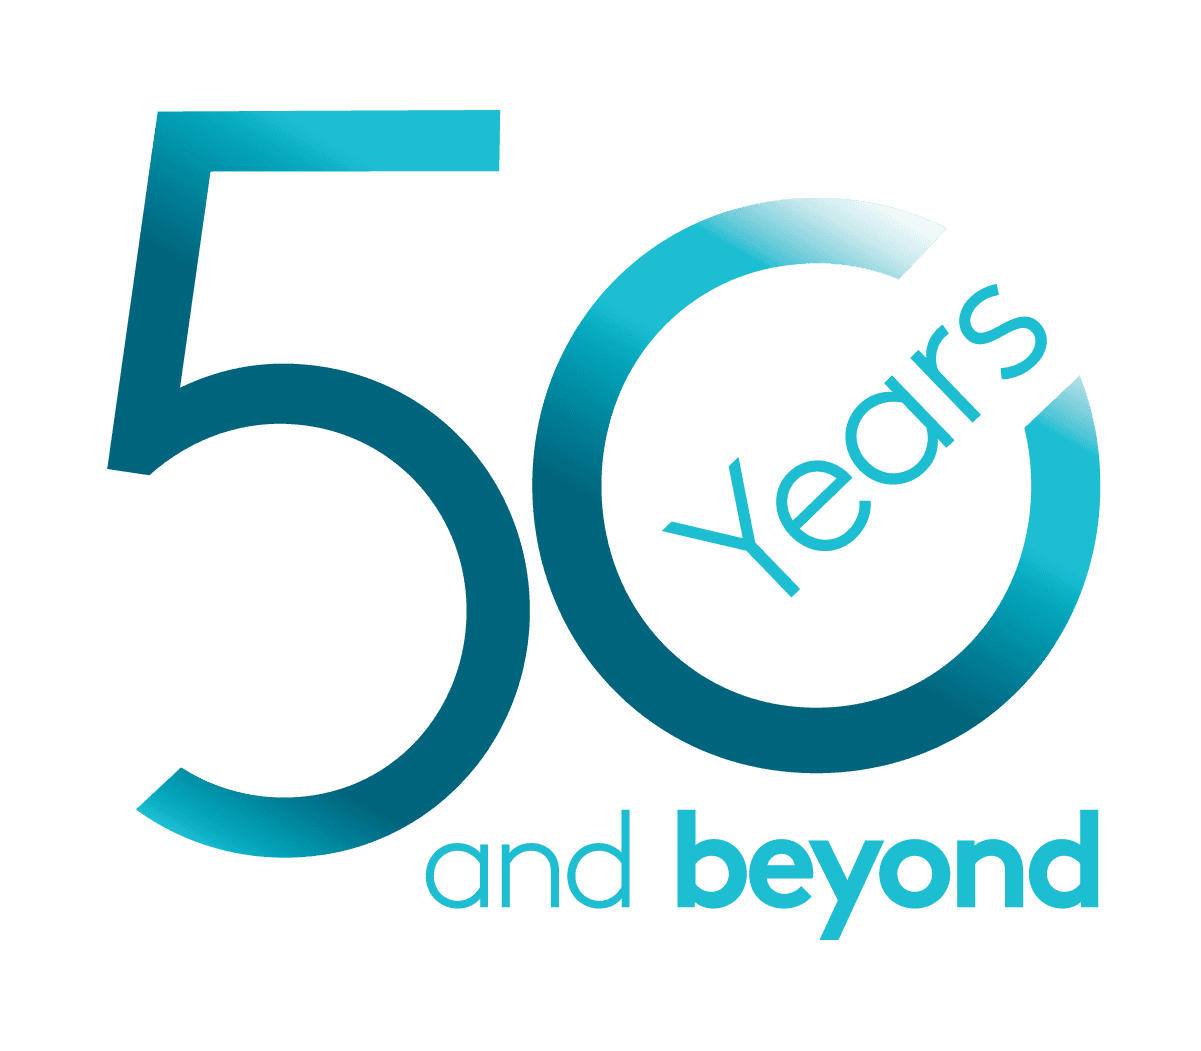 Elekta 50 years celebration emblem